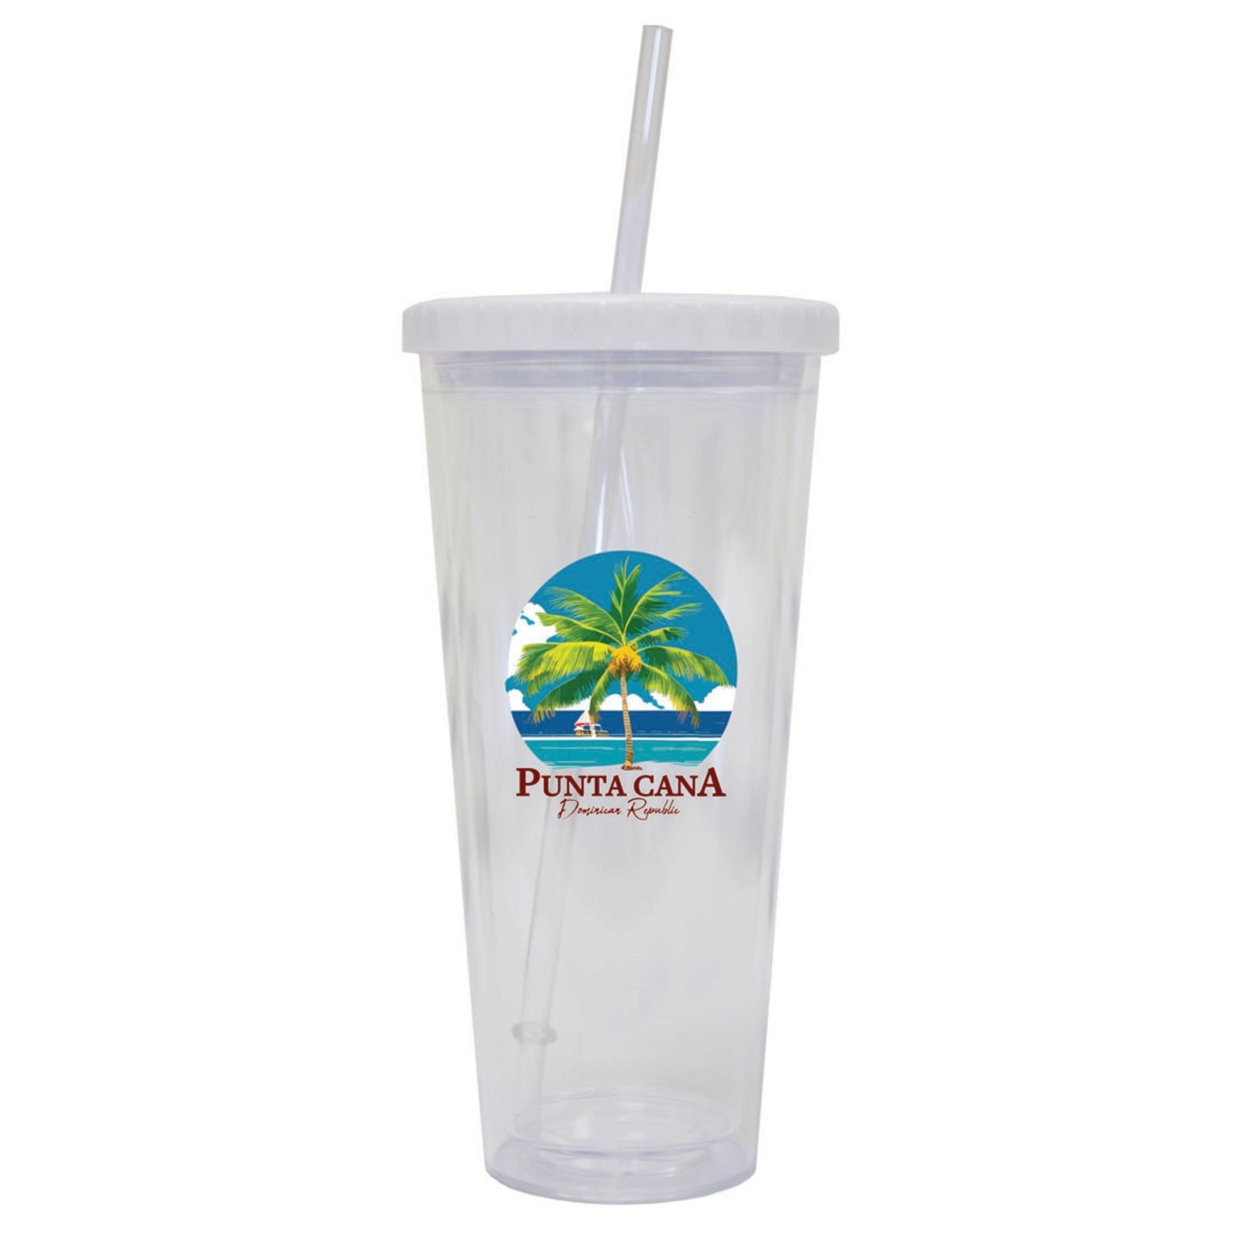 Punta Cana Dominican Republic Souvenir 24 Oz Reusable Plastic Straw Tumbler W/Lid & Straw - Palm